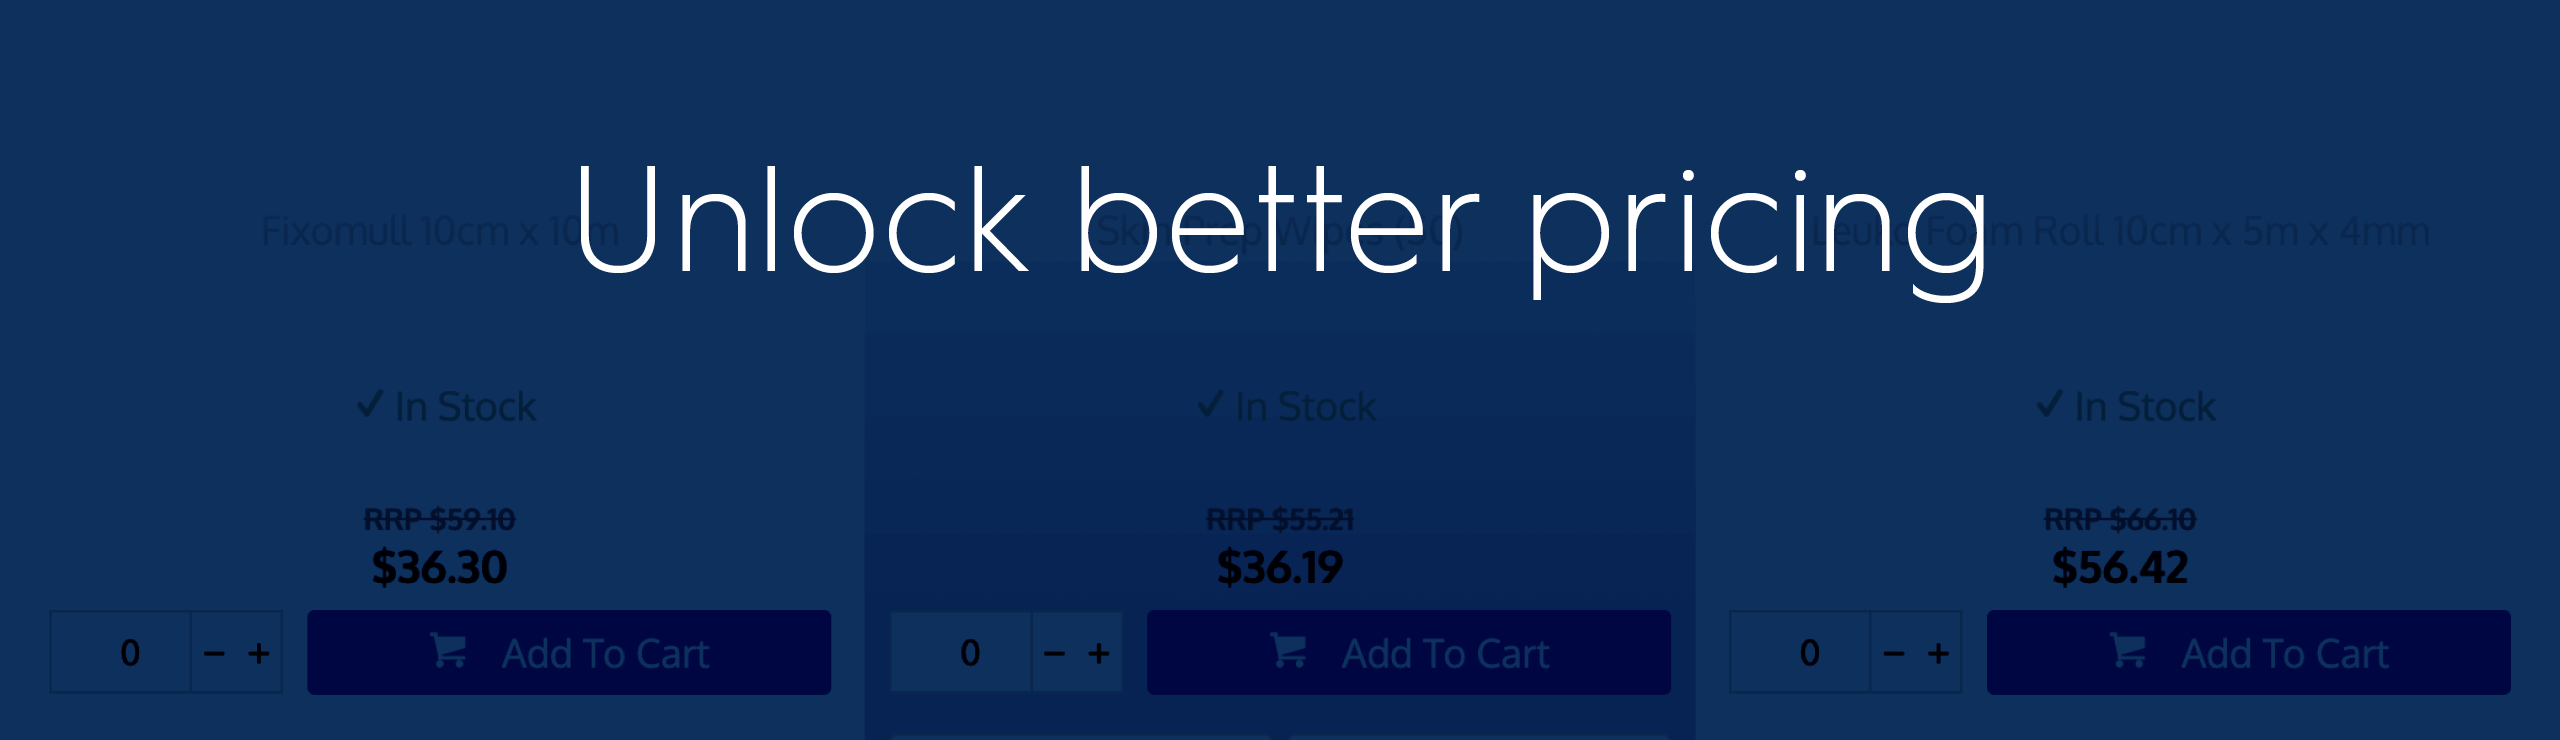 Unlock better pricing banner